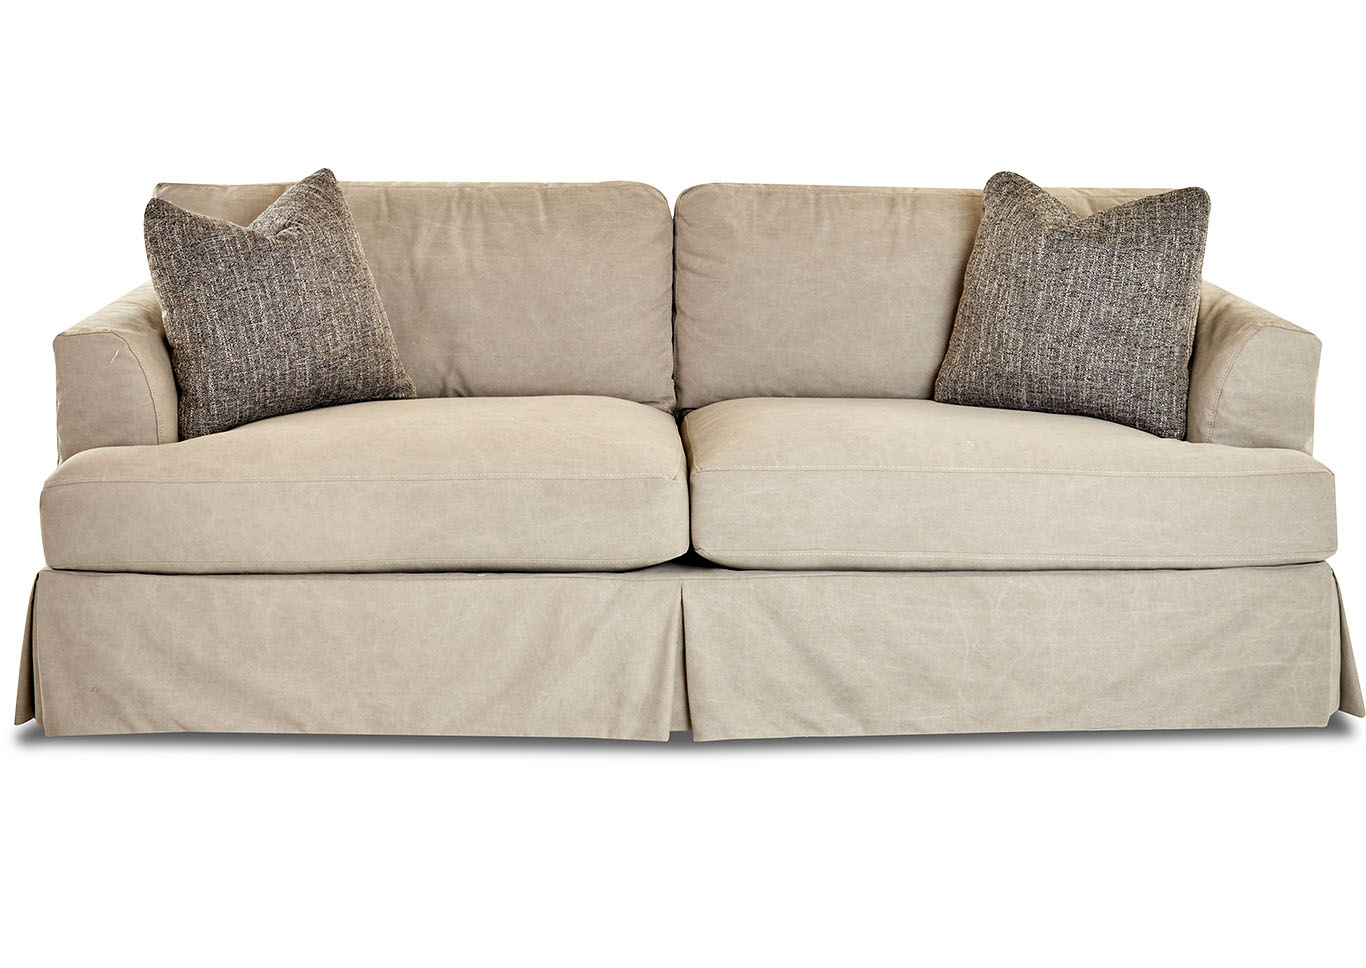 Bentley Linen Stationary Fabric Sofa,Klaussner Home Furnishings